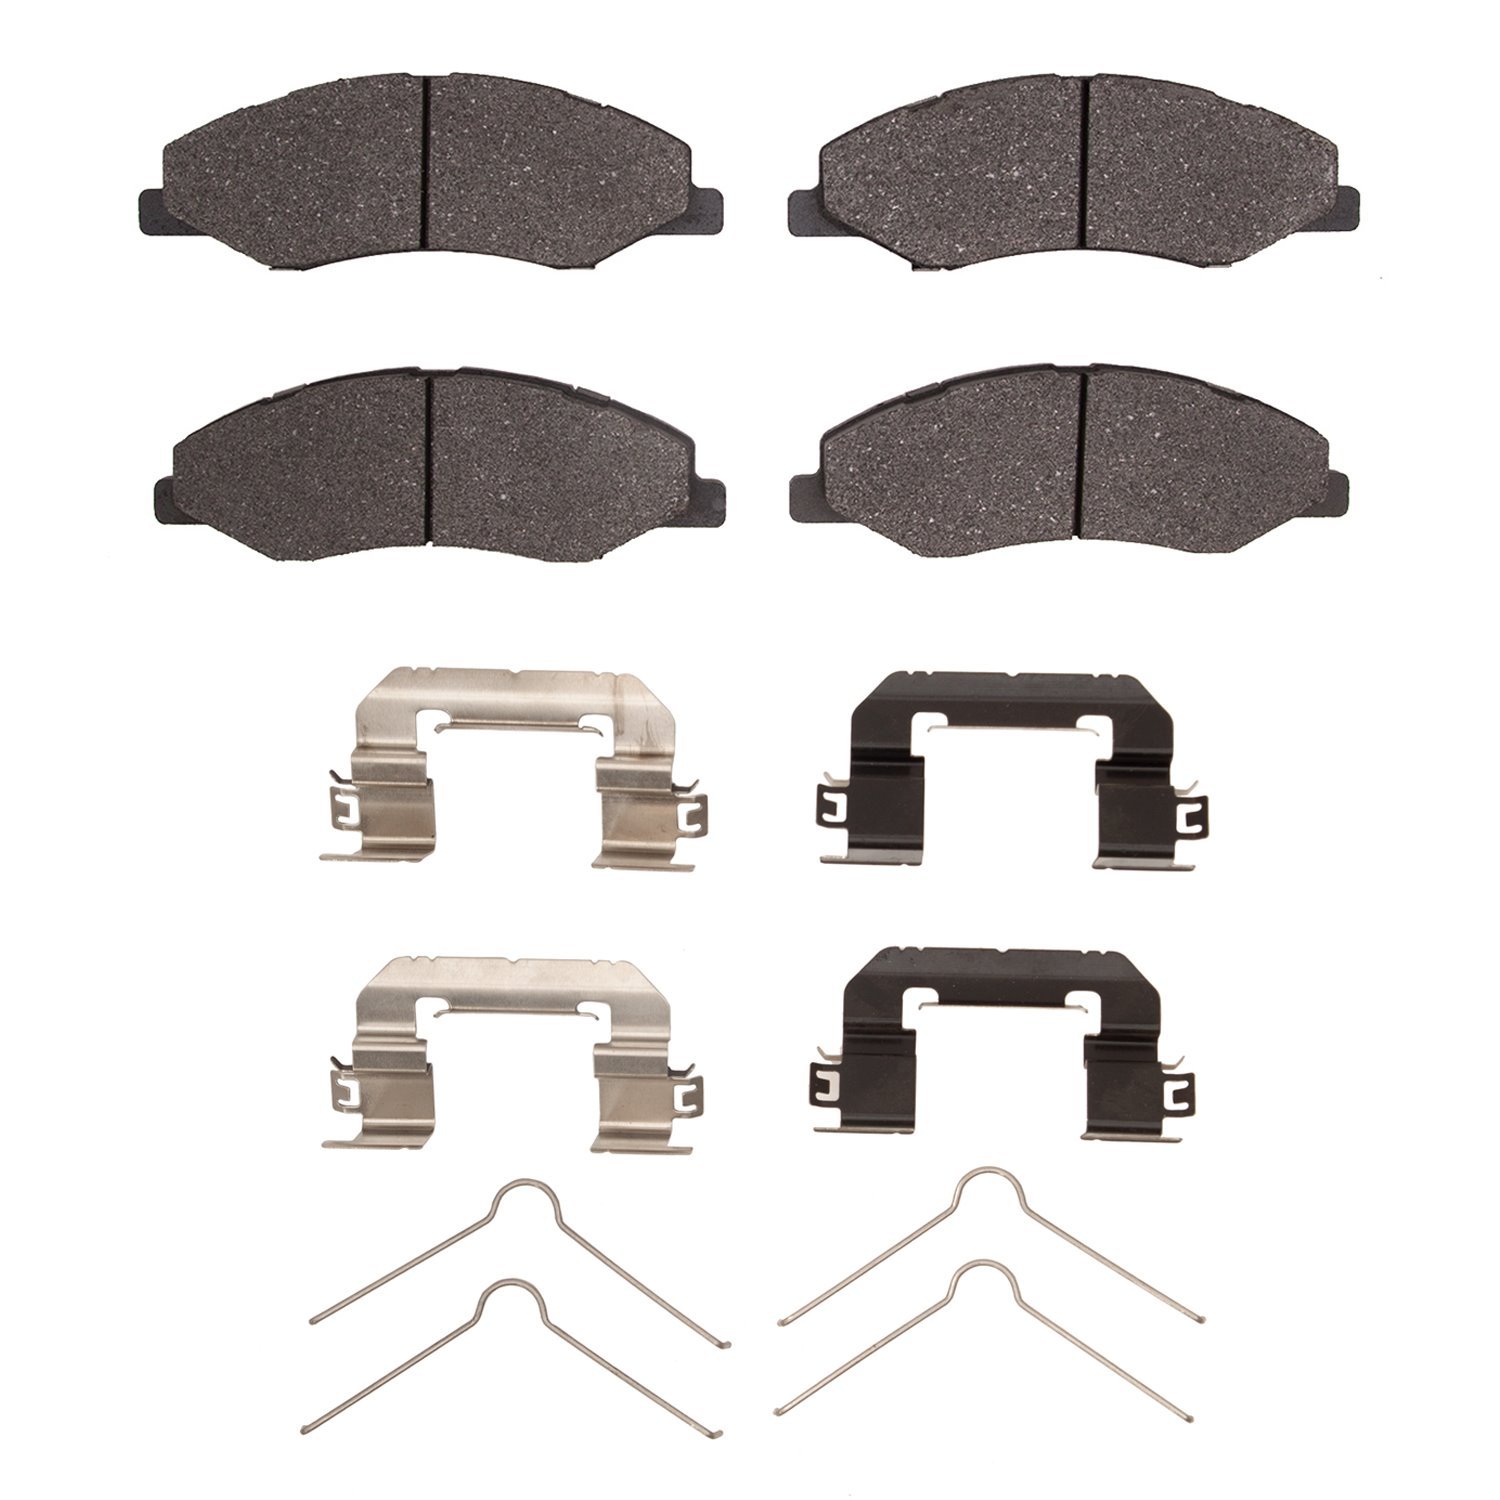 1310-2089-01 3000-Series Ceramic Brake Pads & Hardware Kit, Fits Select Acura/Honda, Position: Front